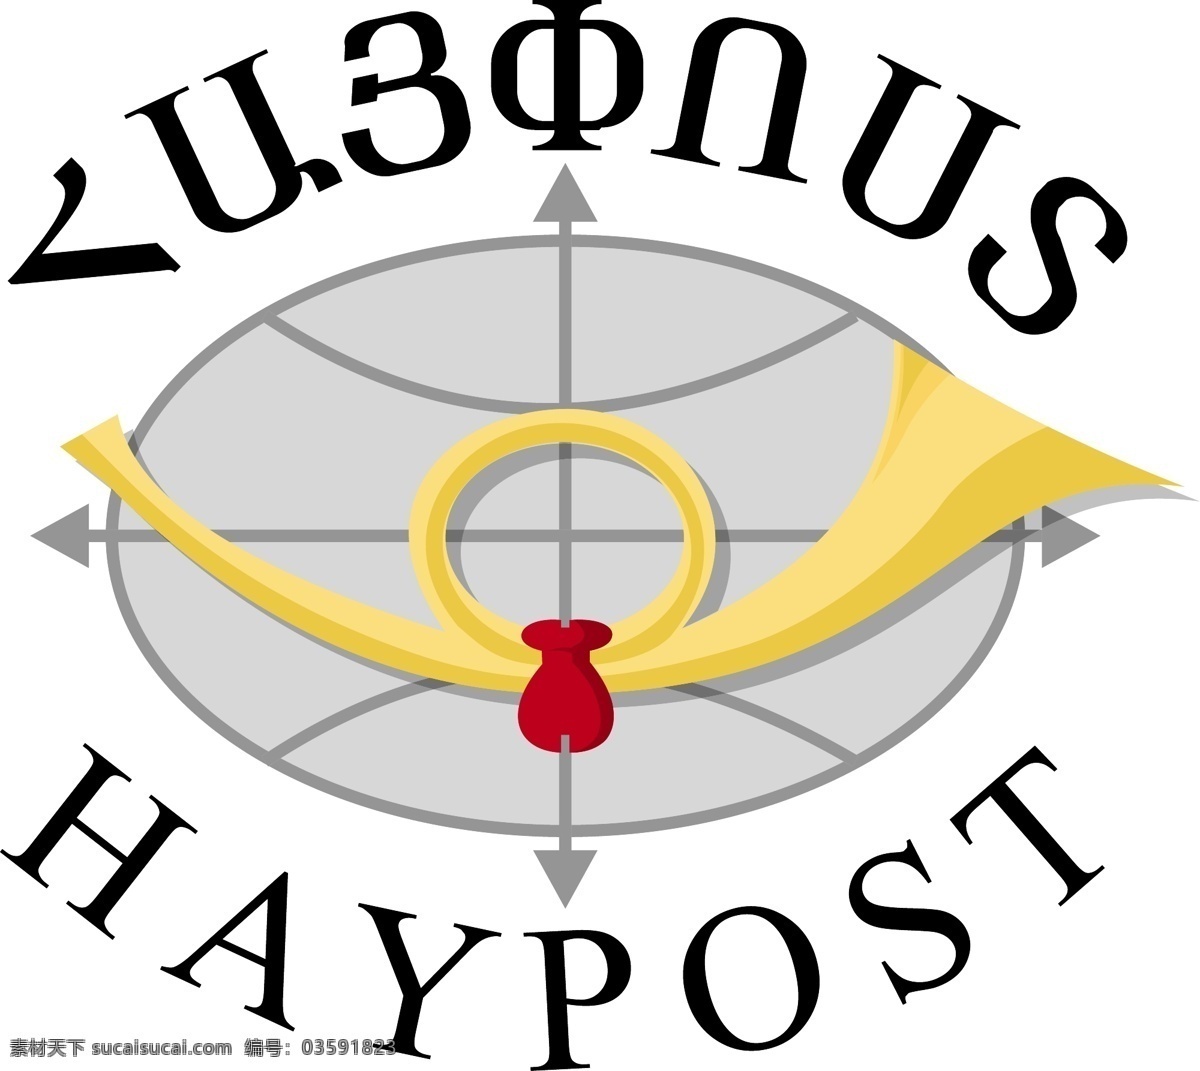 haypost 美国 邮政服务 自由 标志 亚美尼亚 免费 psd源文件 logo设计